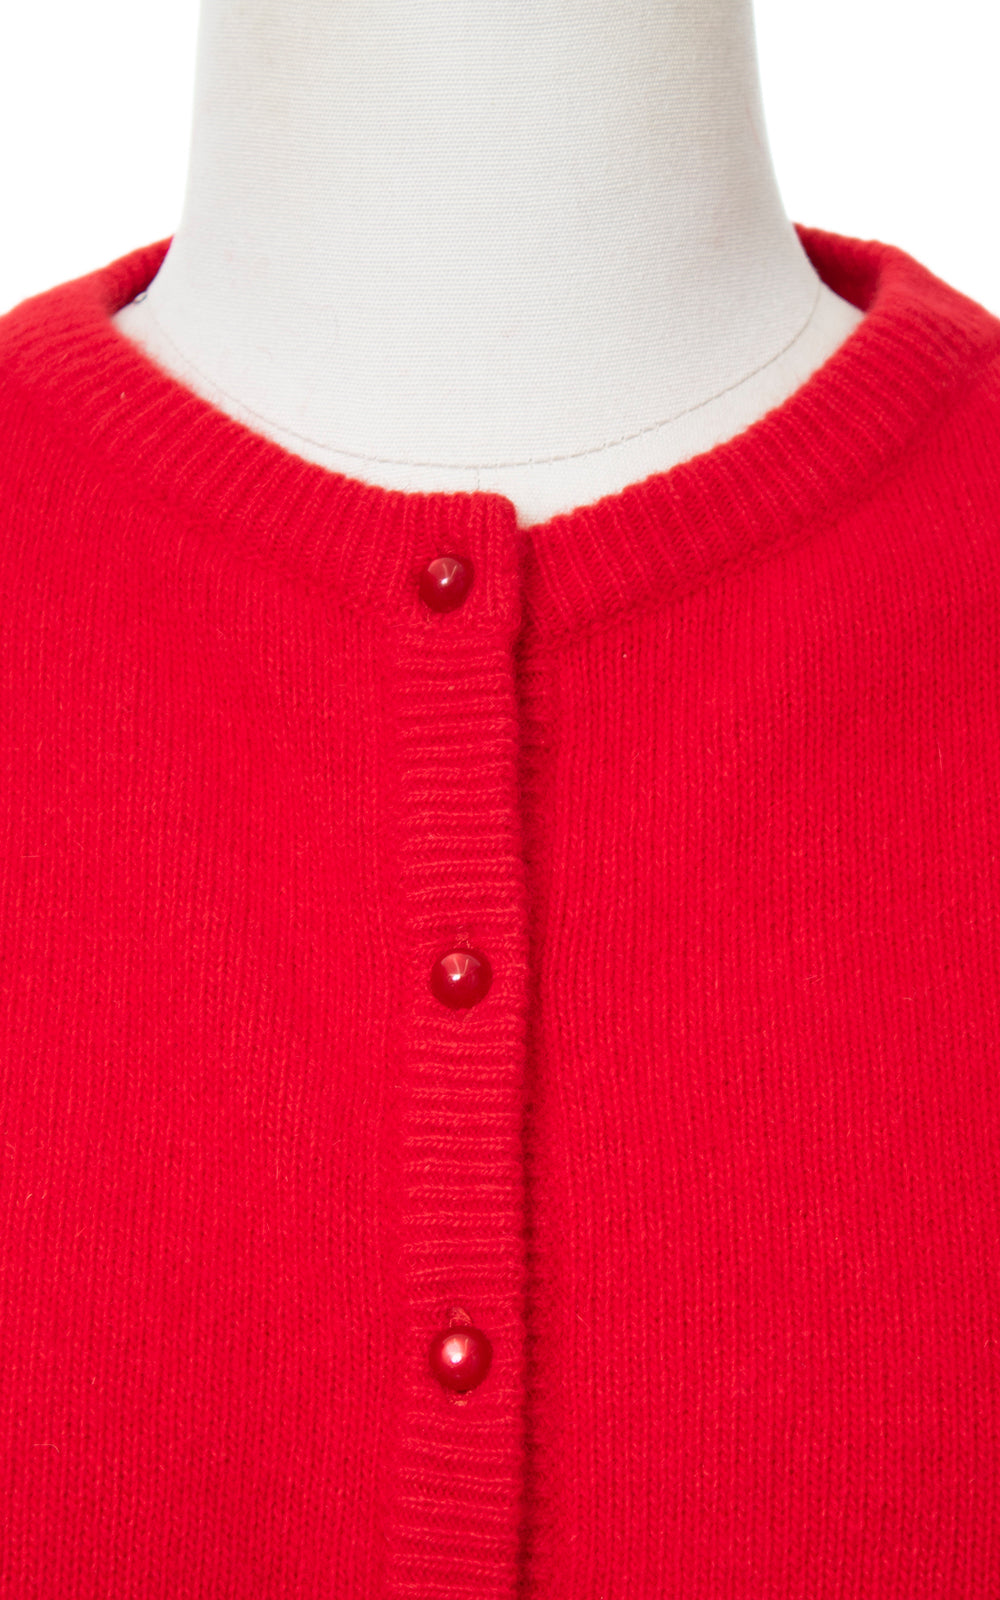 Vintage 1980s BENETTON Red Knit Wool Angora Cardigan small medium Birthday Life Vintage